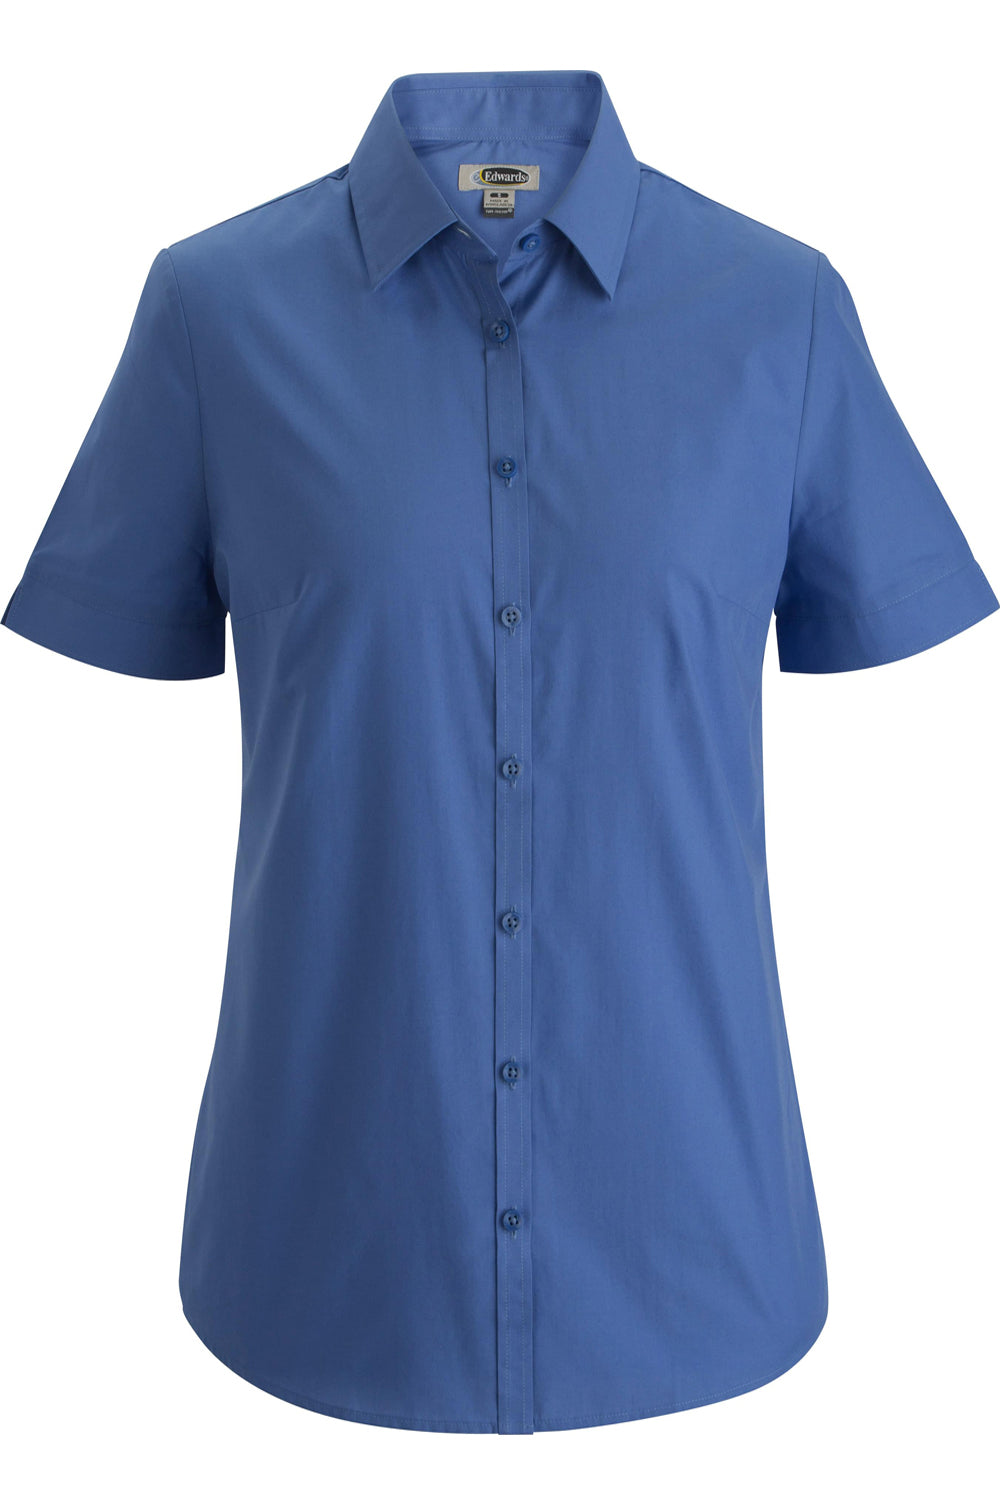 Edwards XXS Ladies' Essential Broadcloth Shirt - French Blue